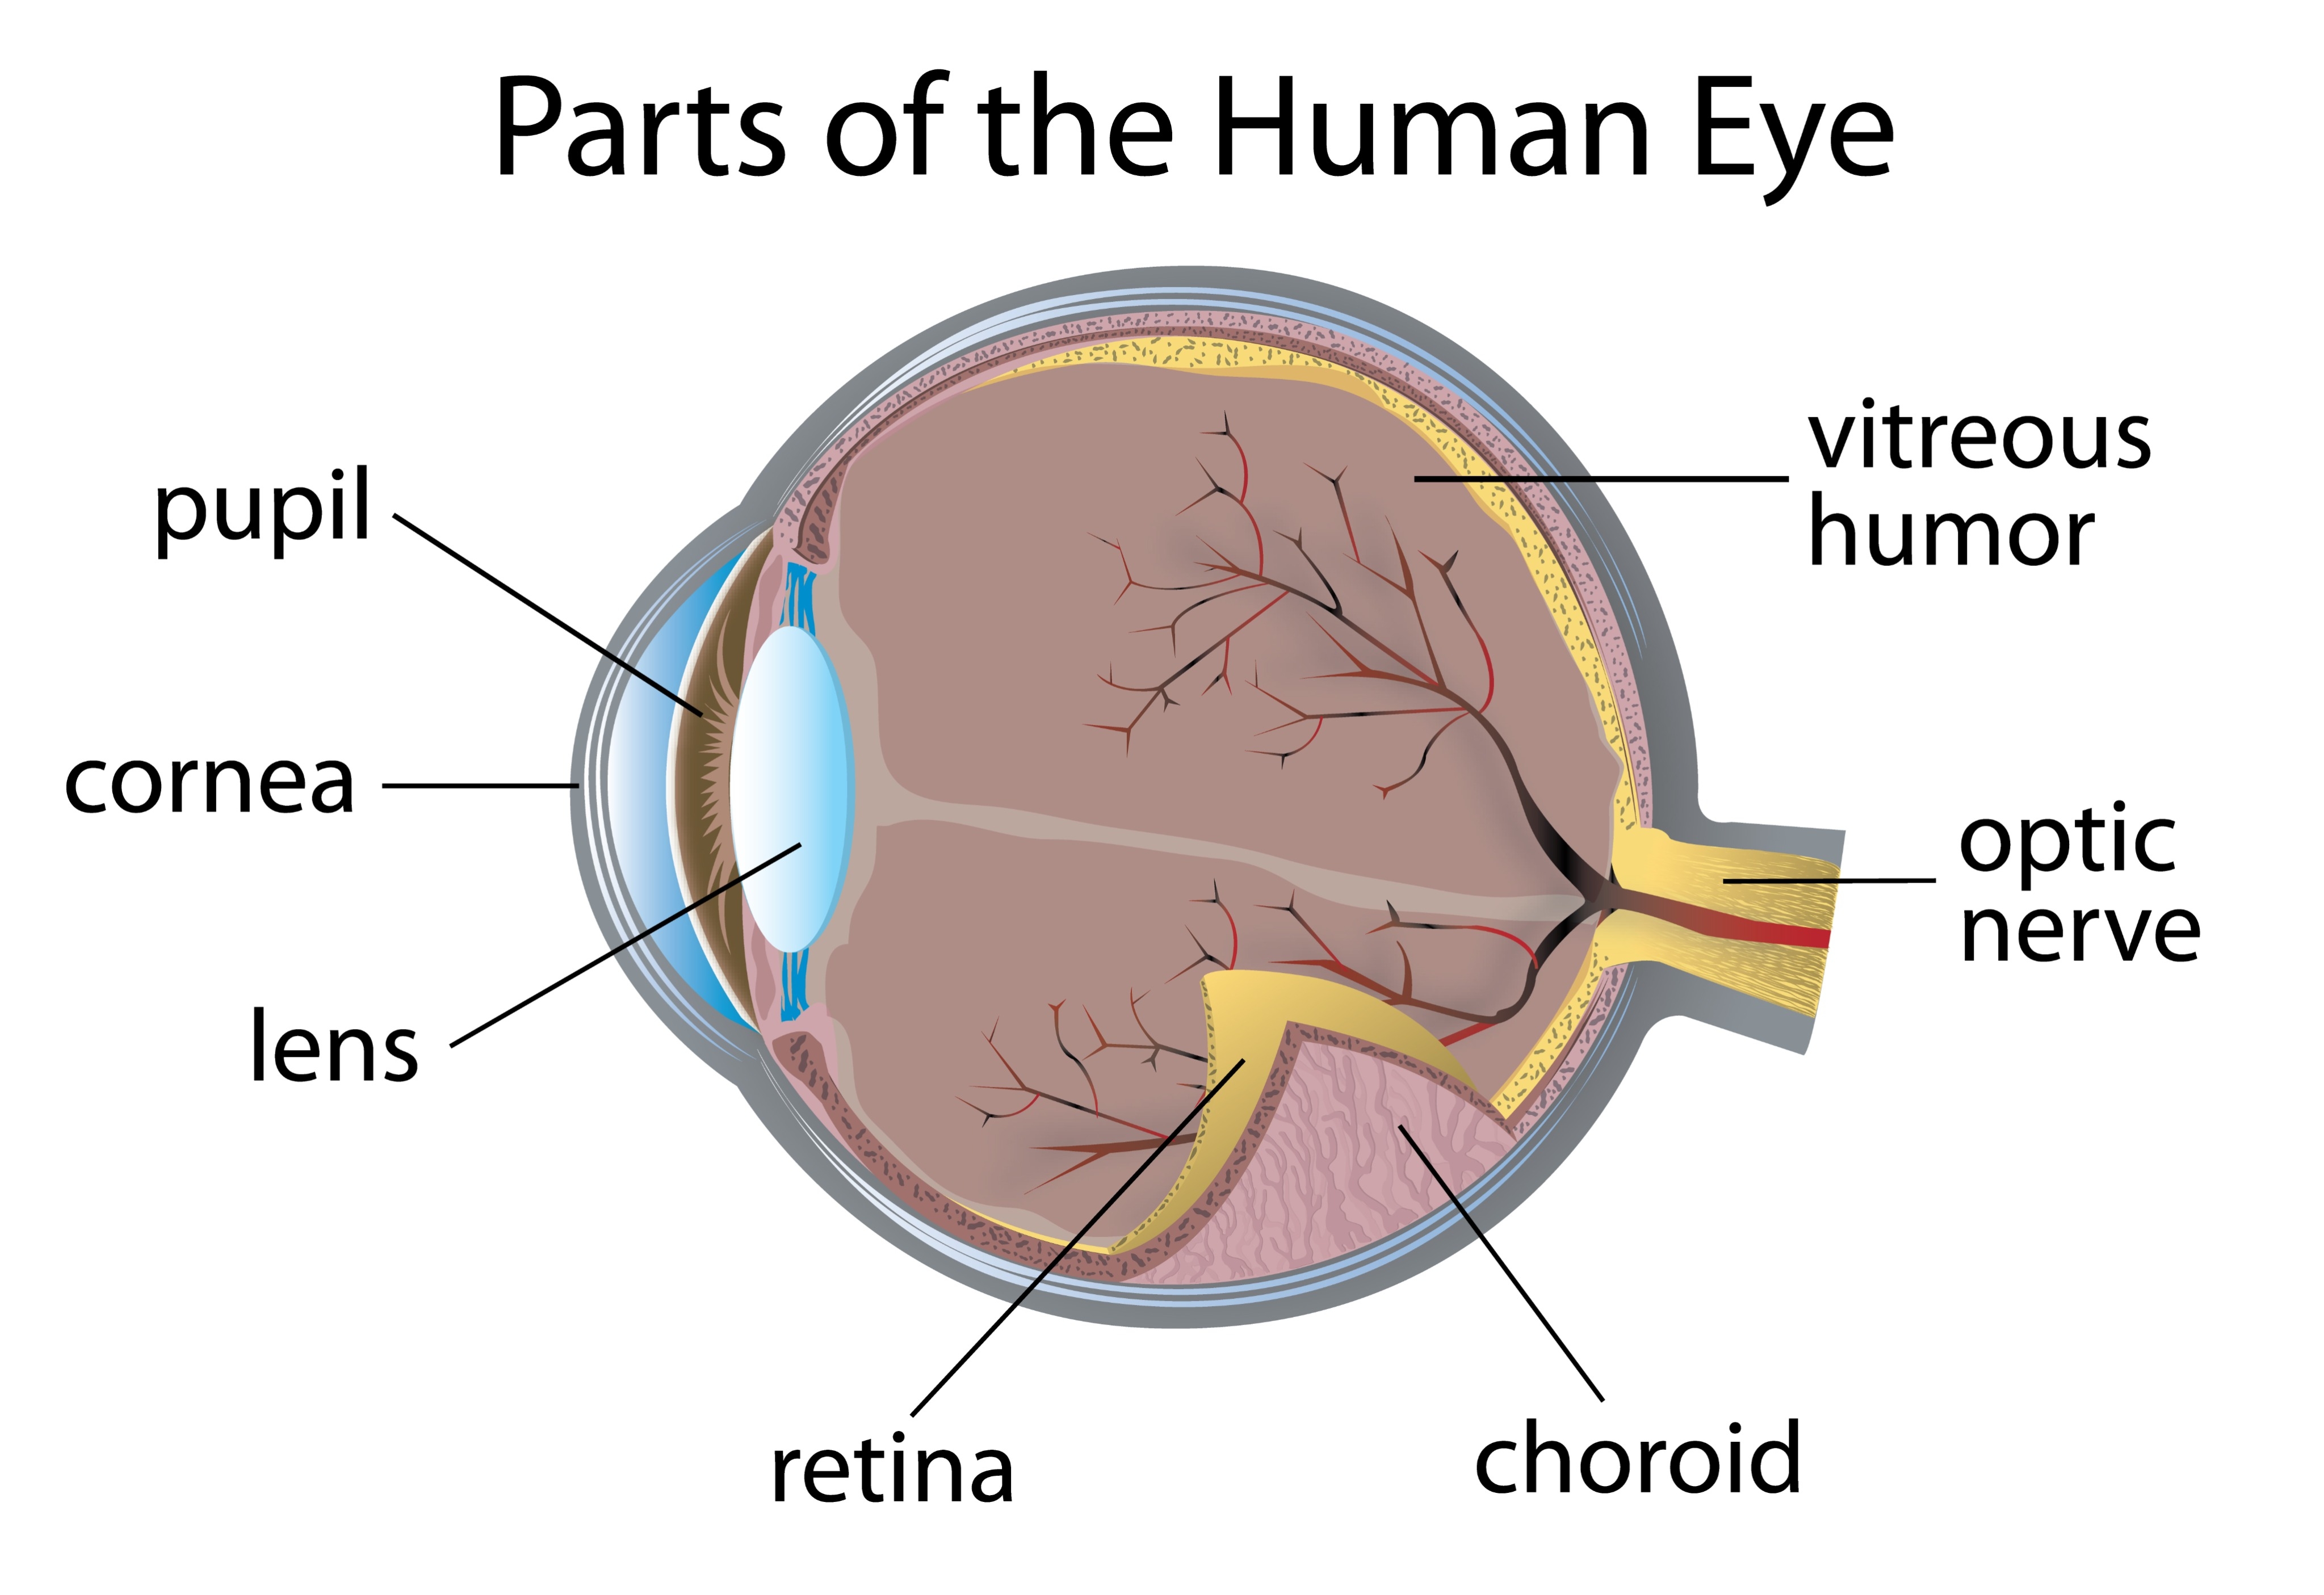 anatomy of the human eye including cornea pupil lens retina vitreous humor optic nerve choroid on the coroner education module for corneal blindness